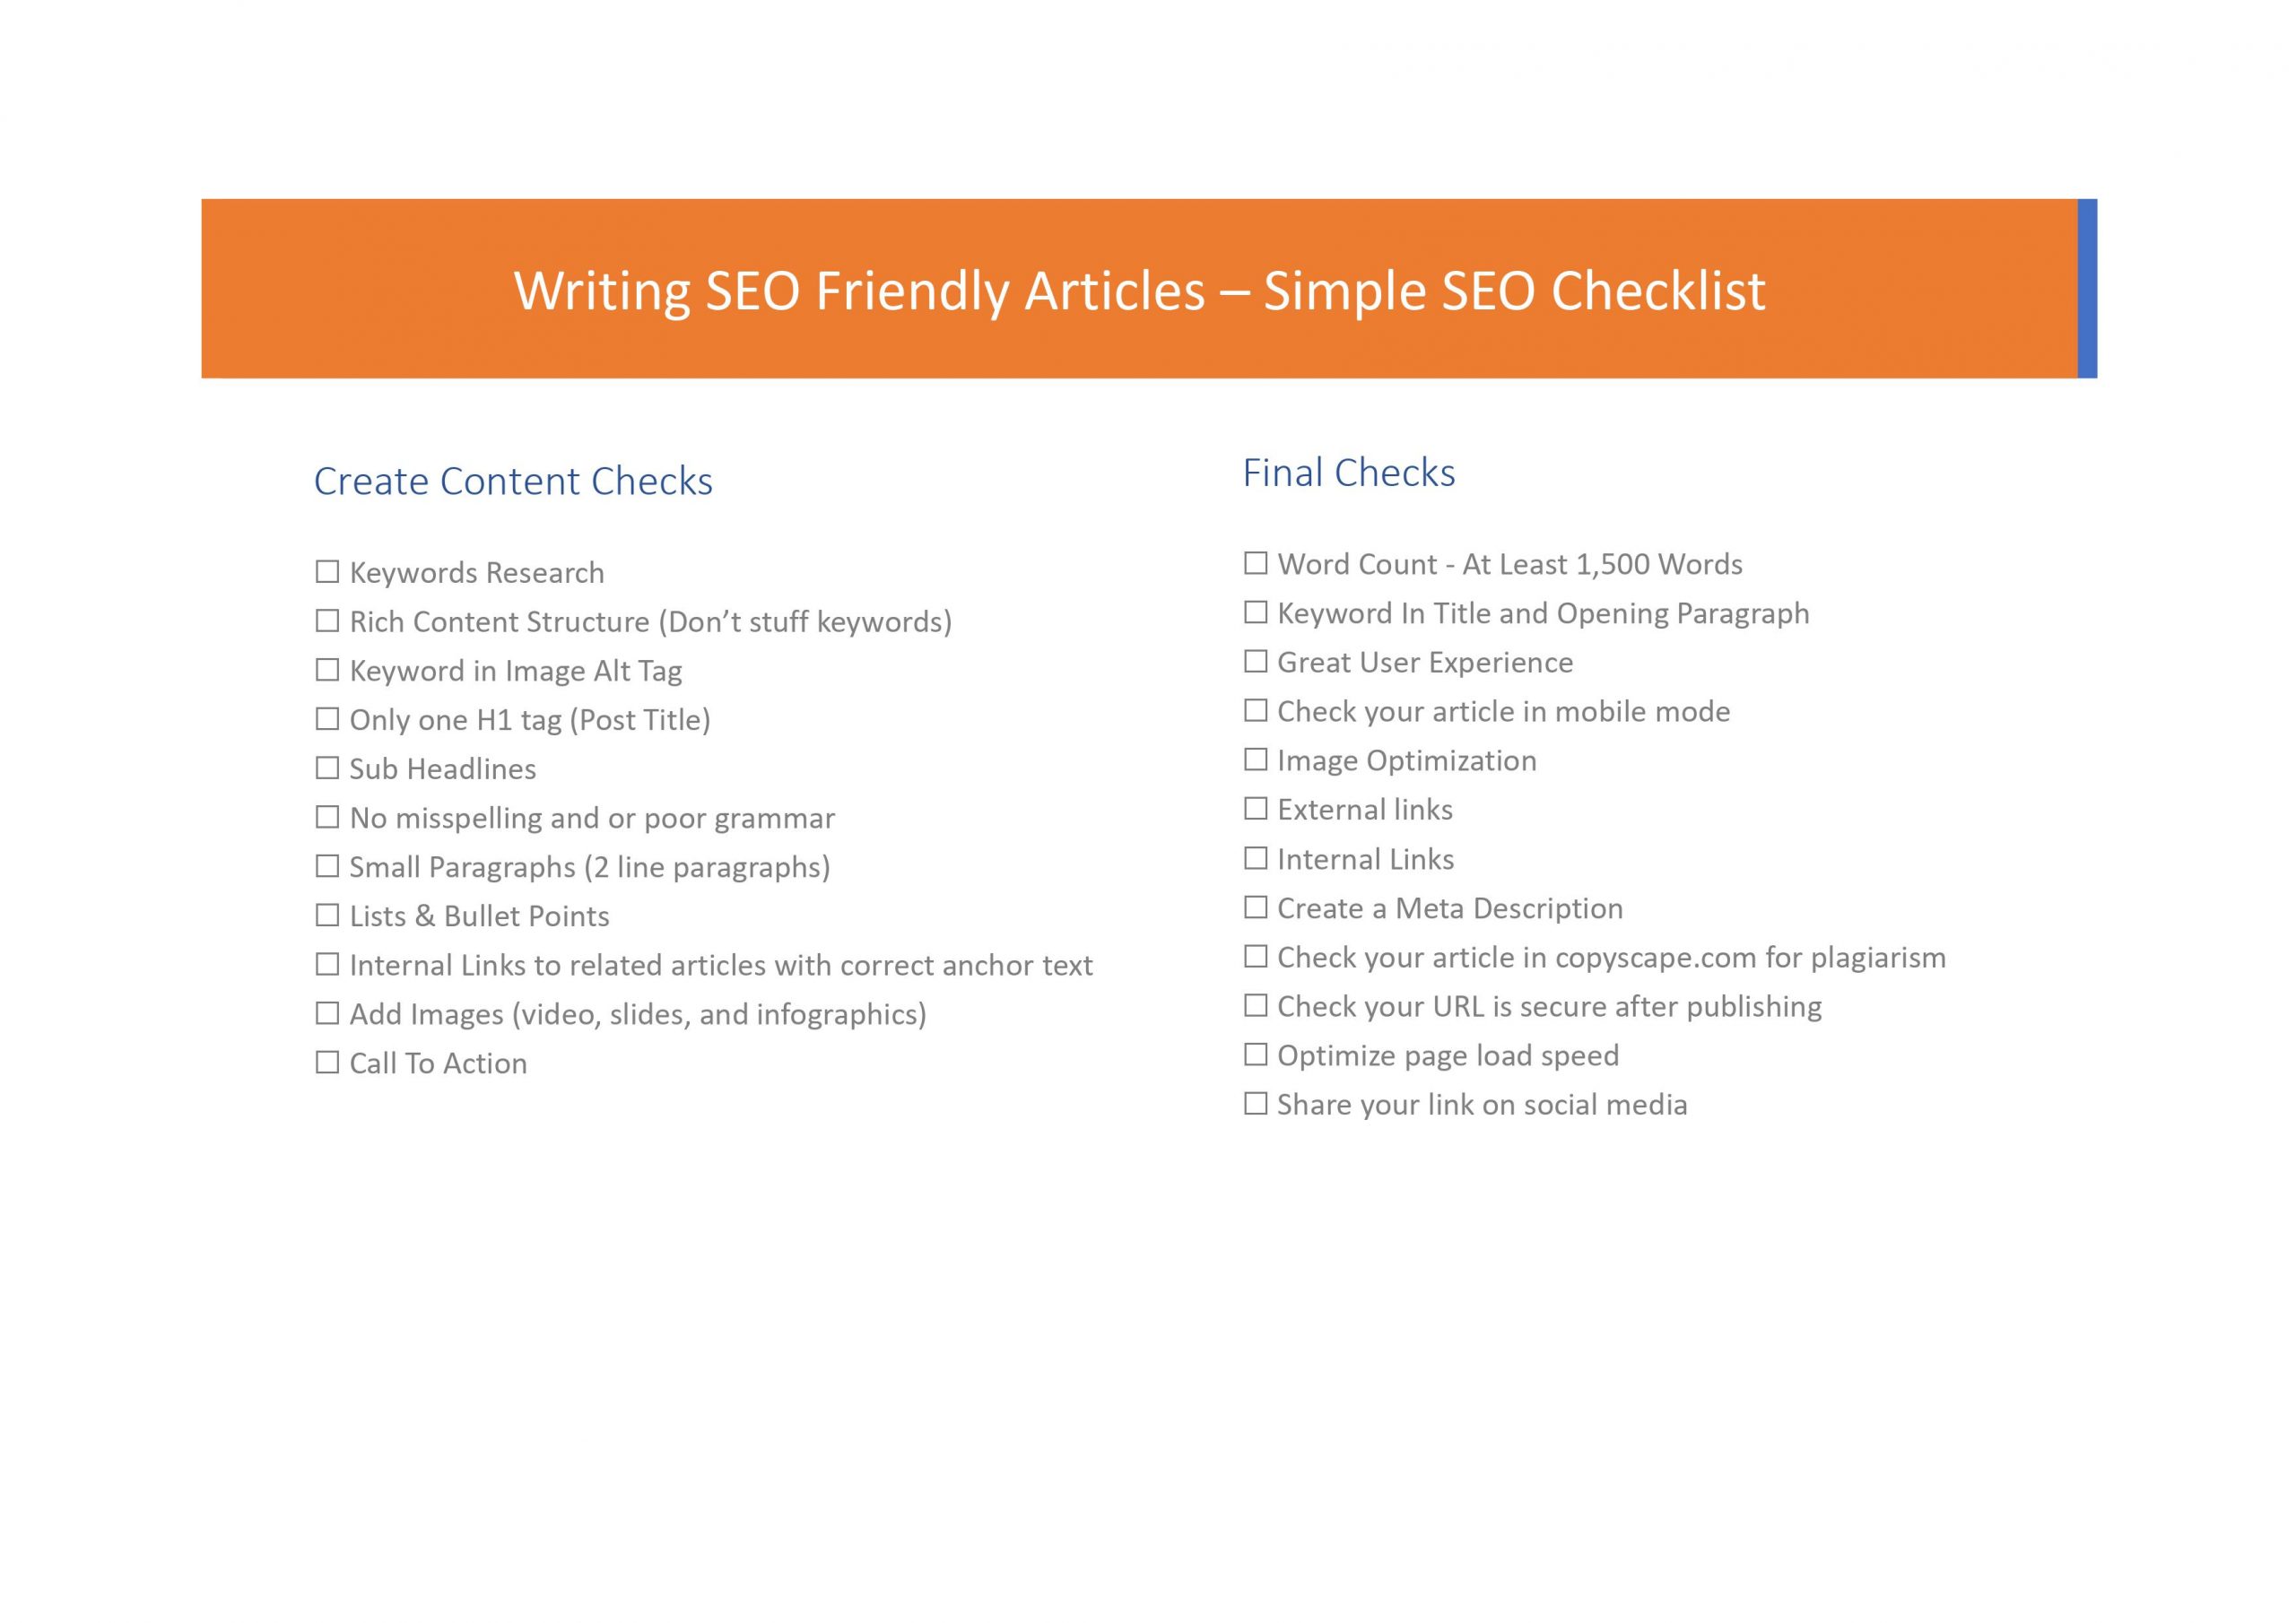 Writing SEO articles checklist